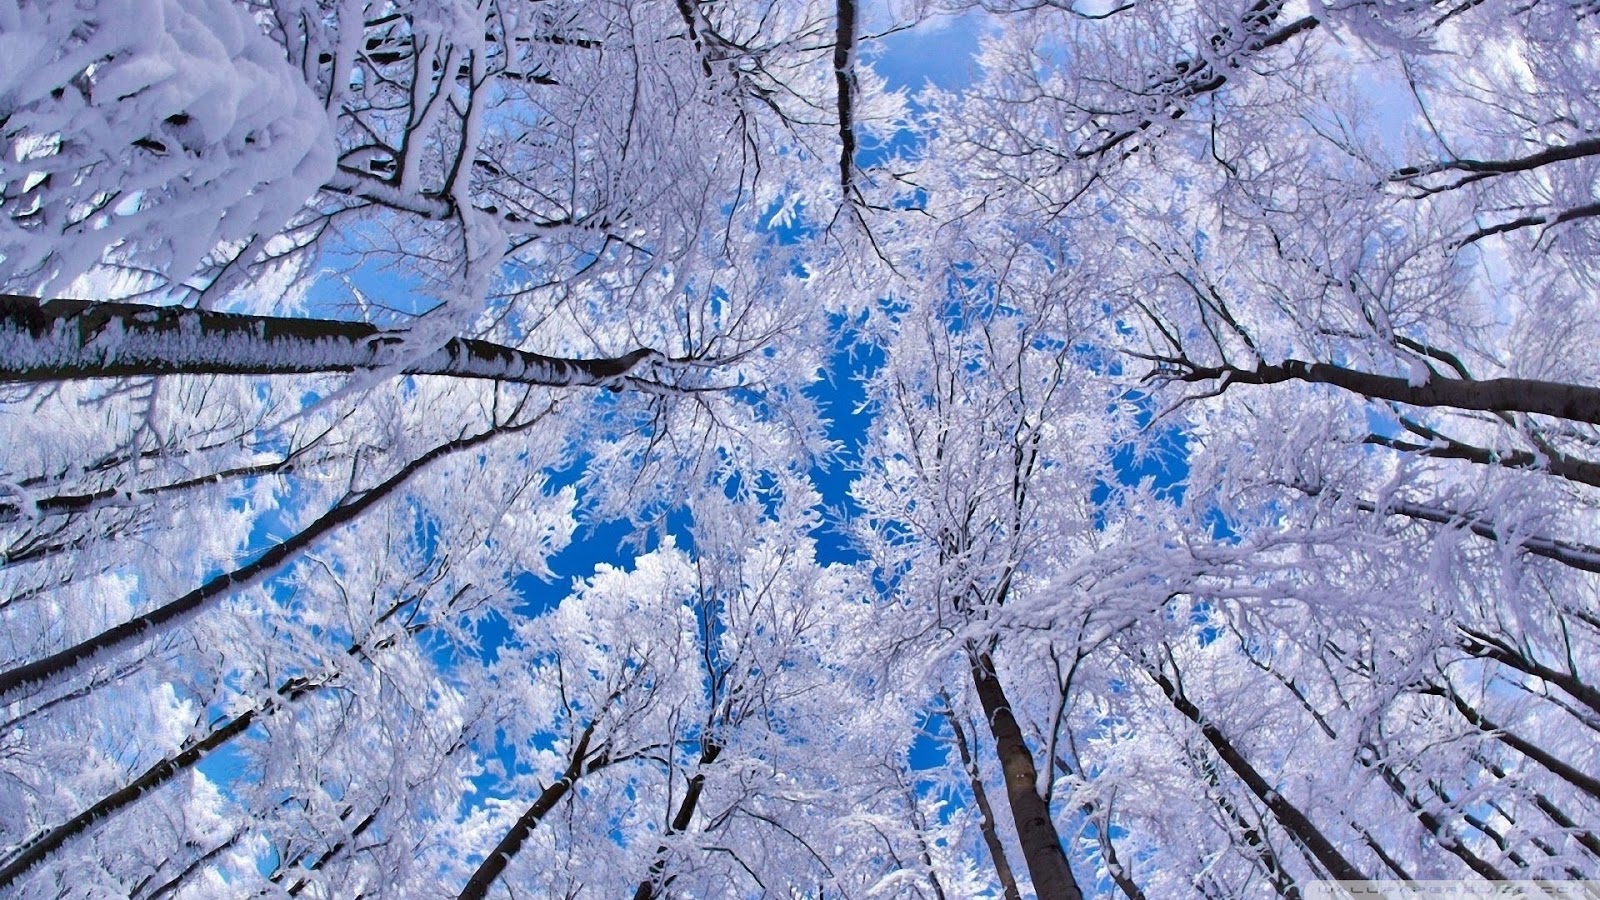 http://2.bp.blogspot.com/-fpp18dEuIAY/UPR0V2hybBI/AAAAAAAAG0o/-8Y7C8Ze7ls/s1600/neige_arbre+hiver.jpg